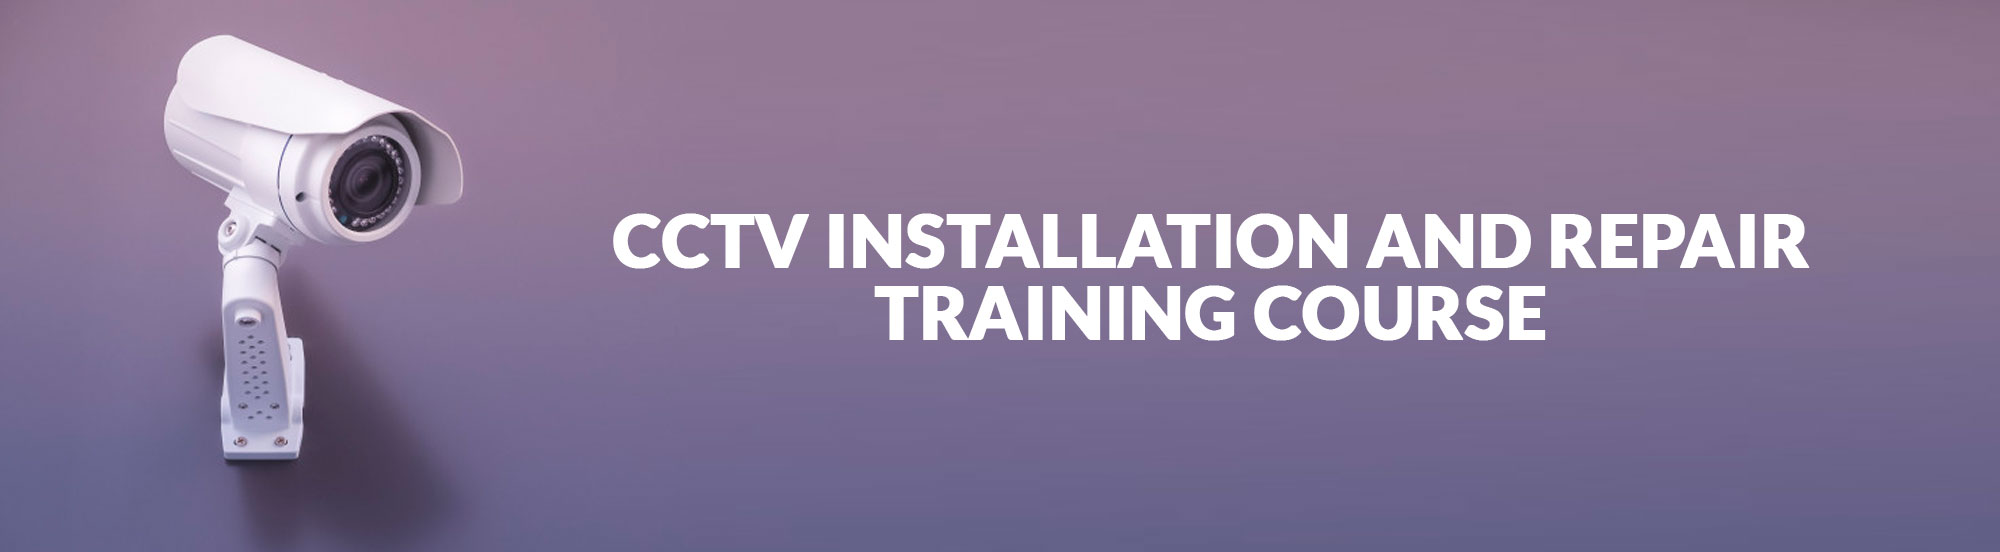 cctv-camera-instalation-course-centre-in-kozhikode